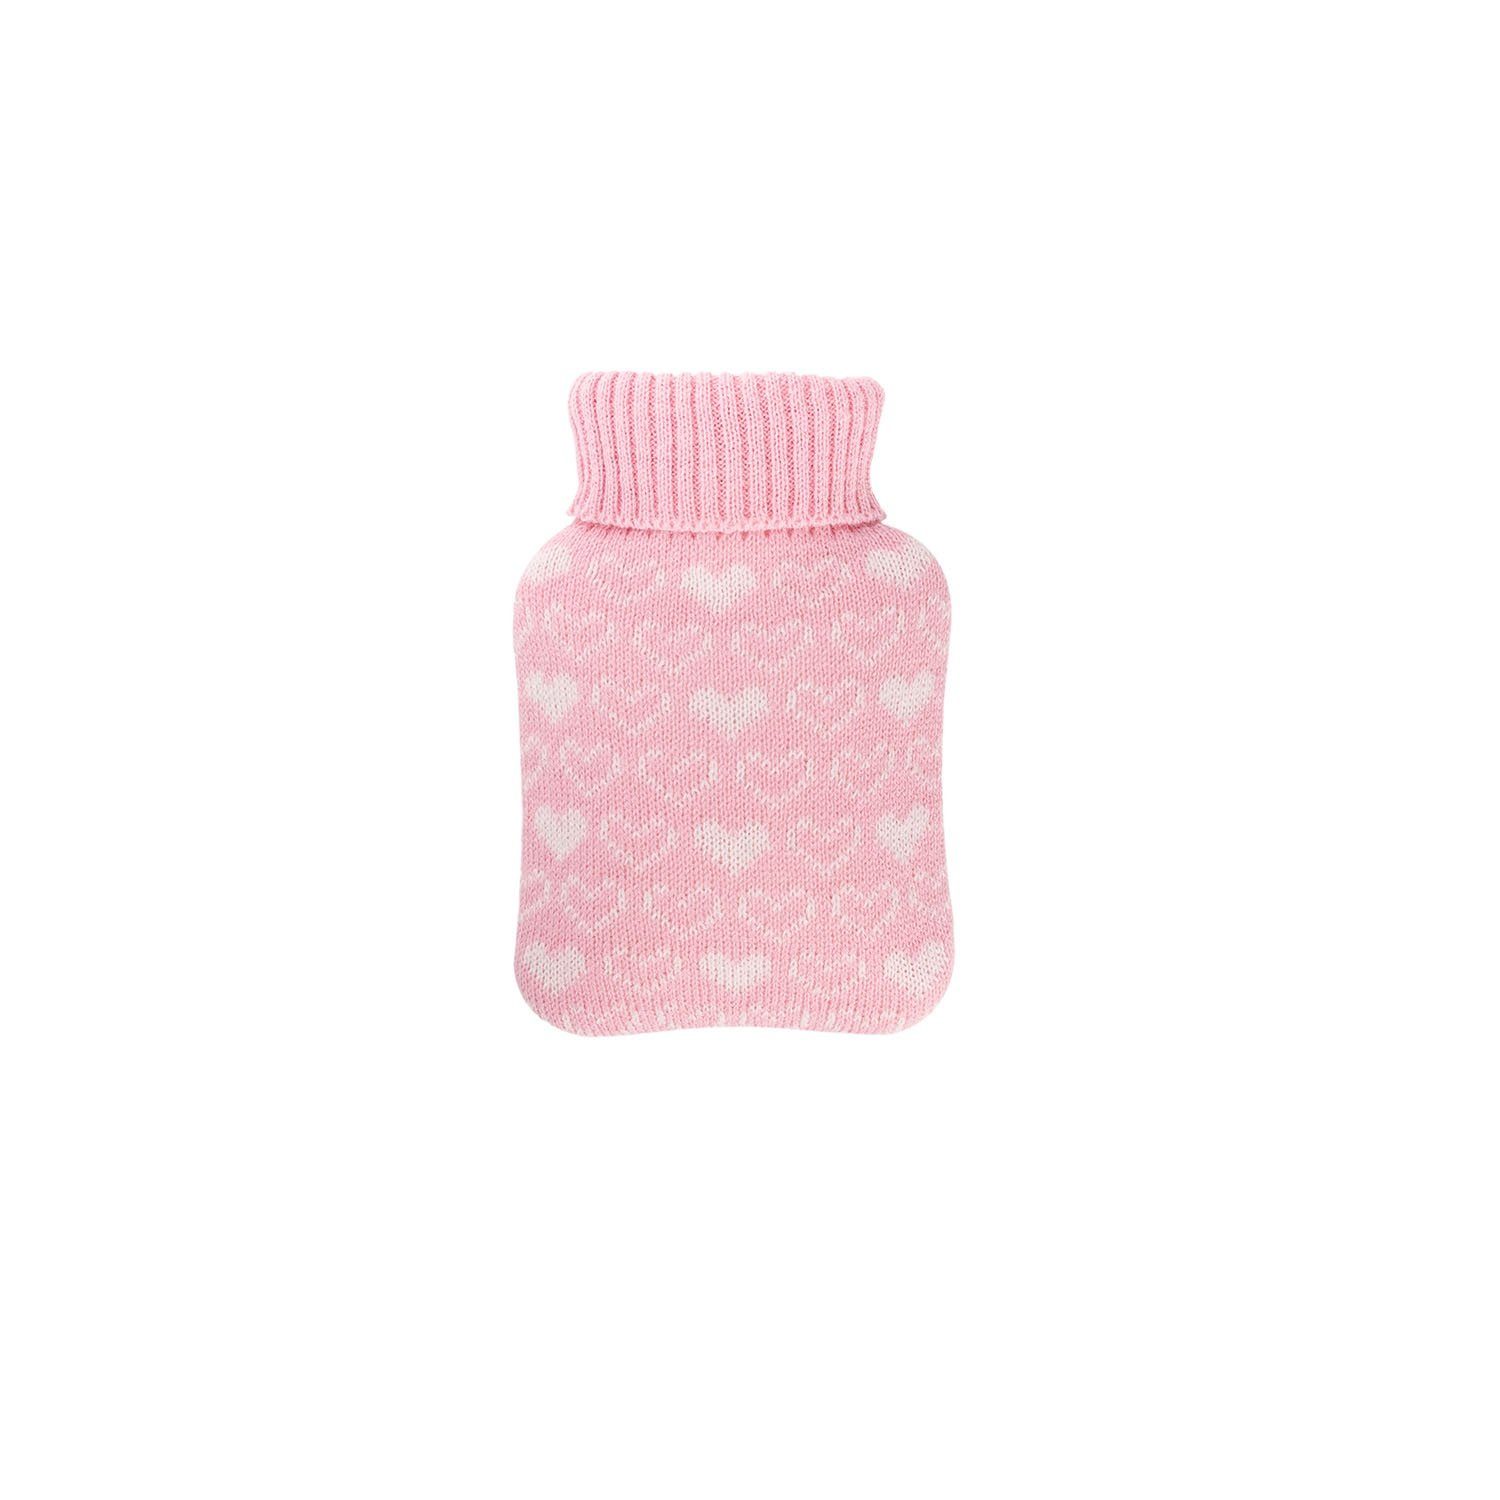 Hugo Frosch Wärmflasche - Mini-Wärmflasche 0,2 l mit Strickbezug rosa Herzen, Made in Germany